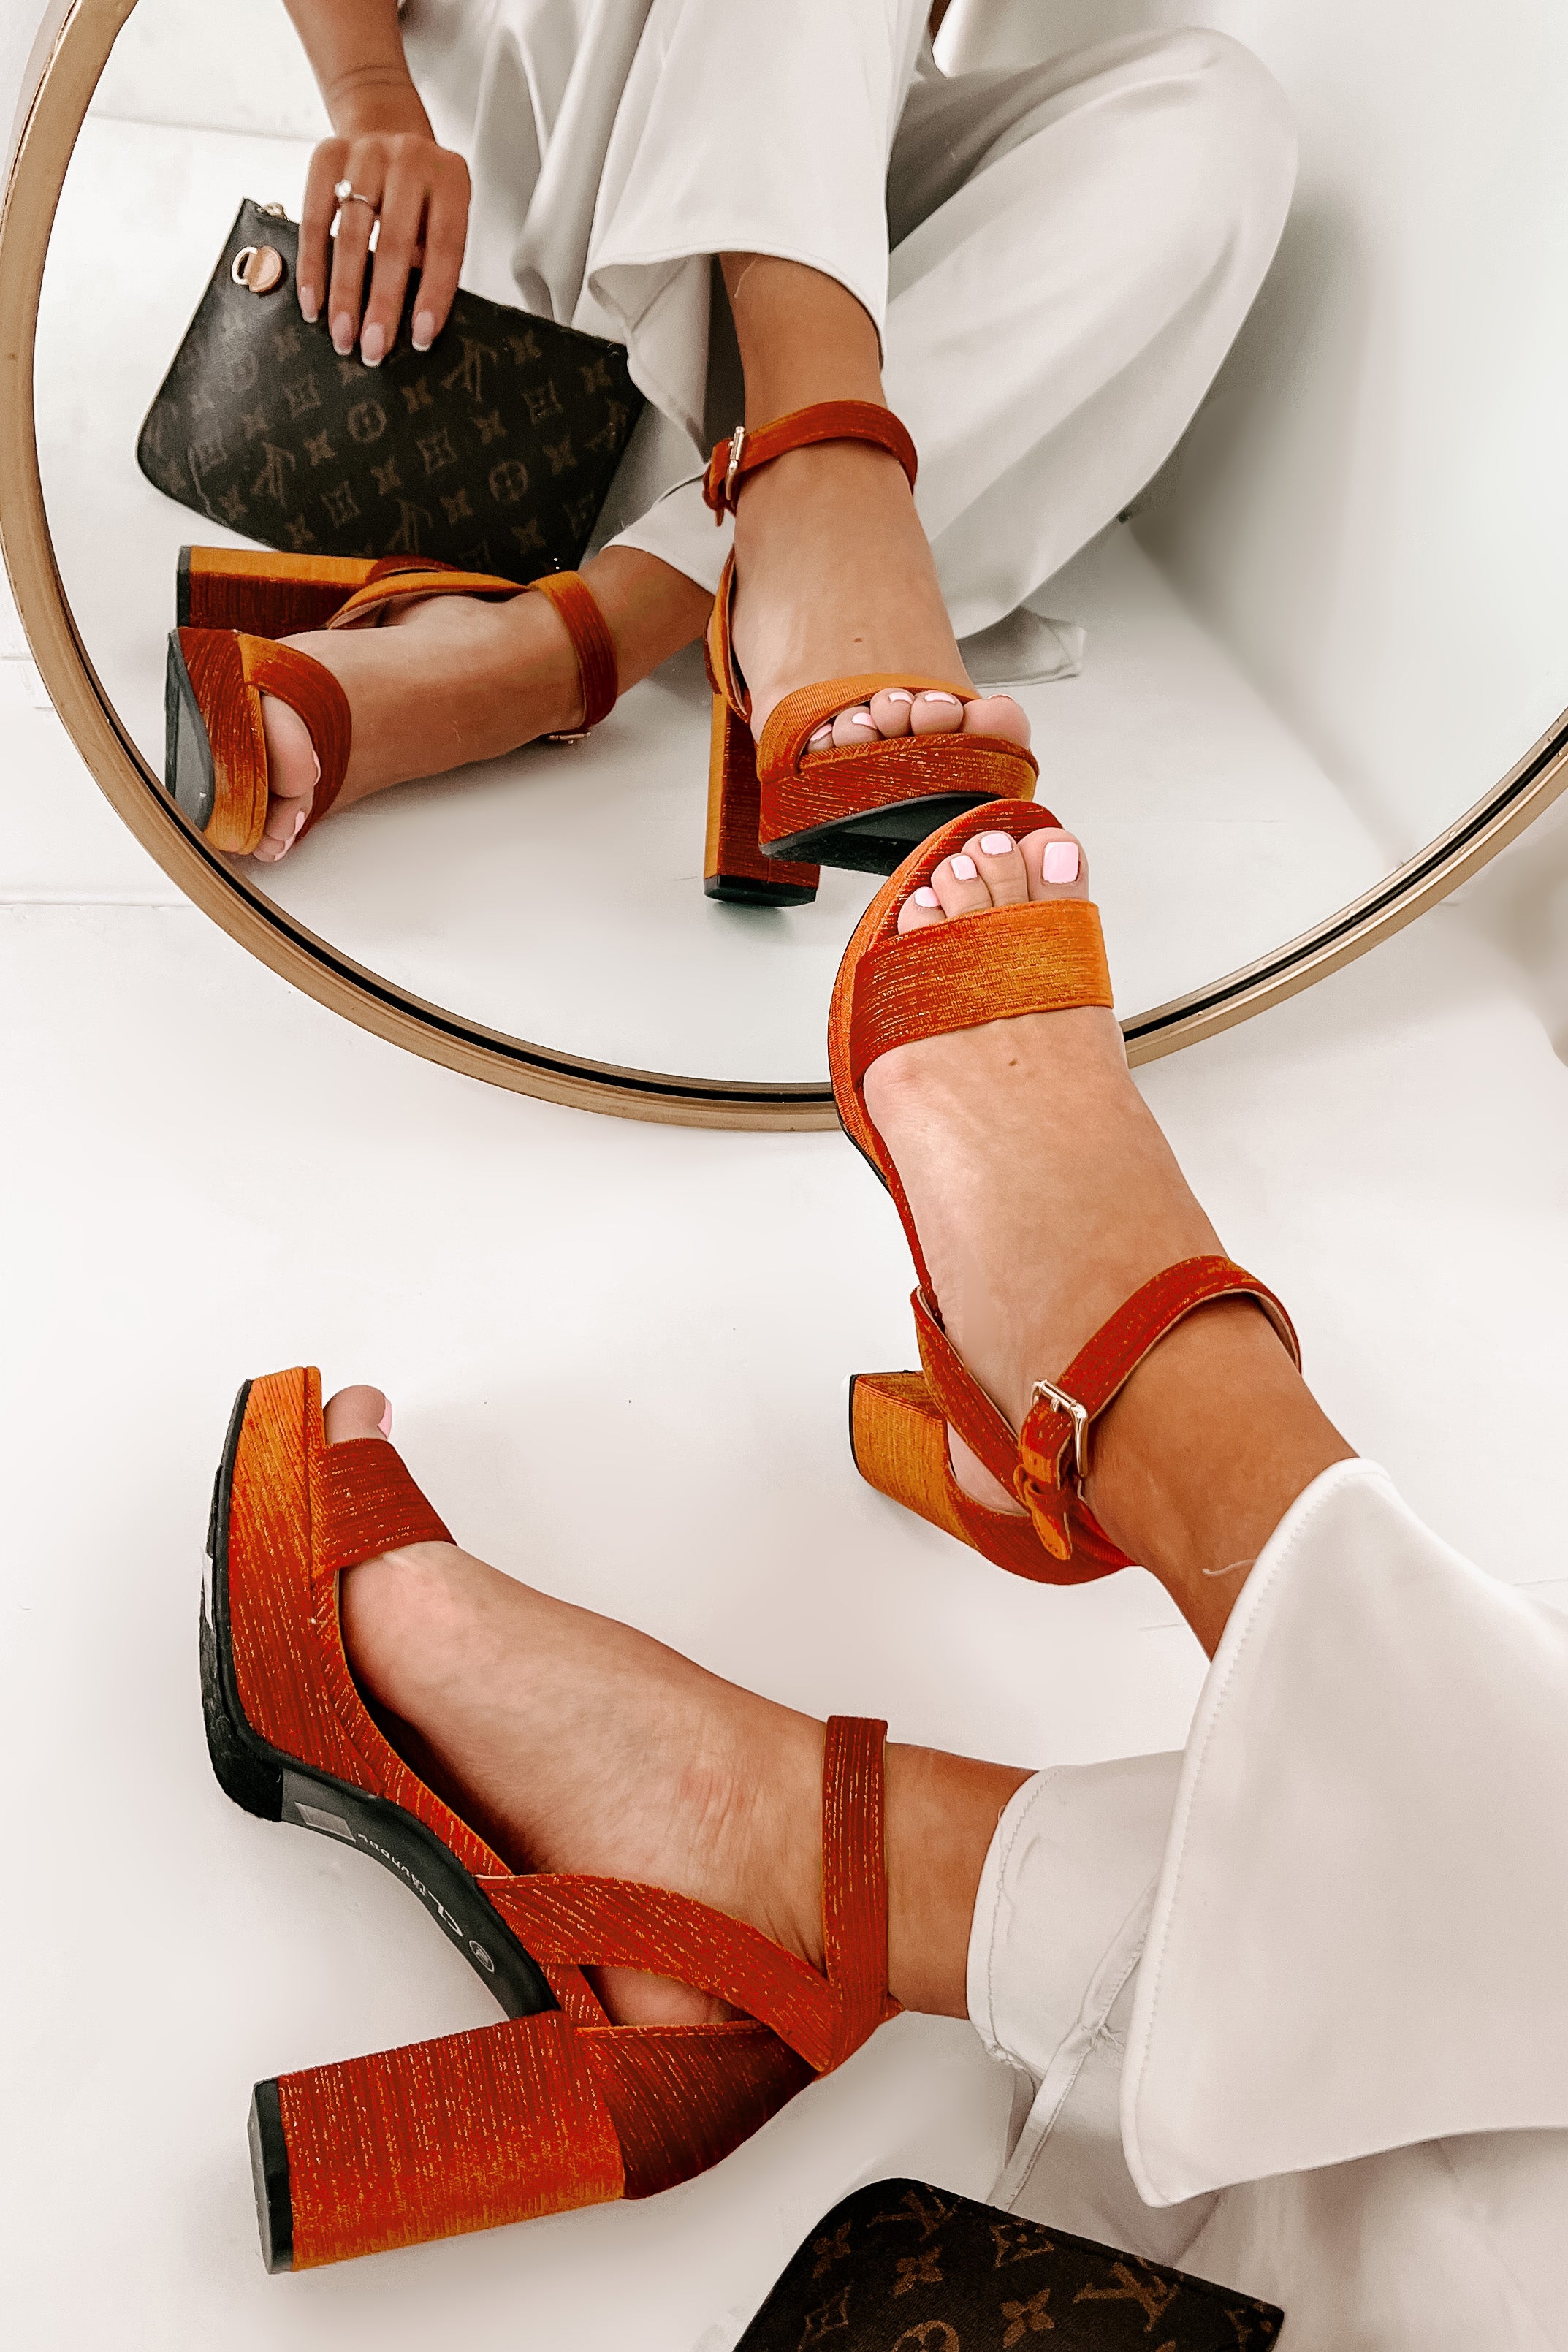 Buy Orange Block Heel, Orange Wedding Shoes, Orange Heel, Orange Block Heel  Sandals, Wedding Gift, Bride Shoes, Bridal Shoes Online in India - Etsy